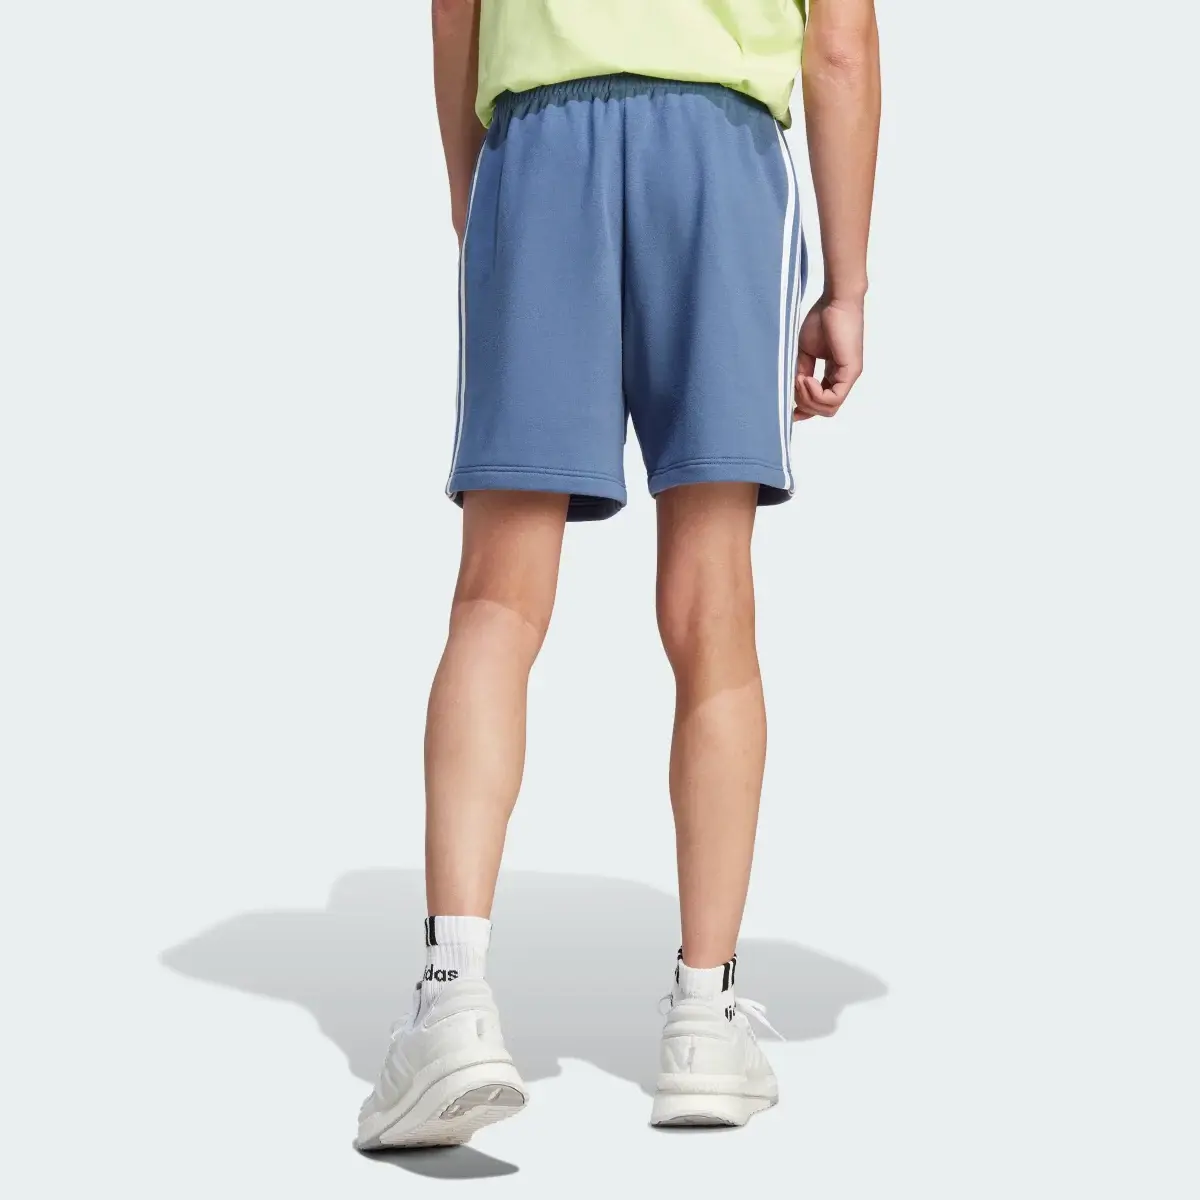 Adidas Colourblock Shorts. 2